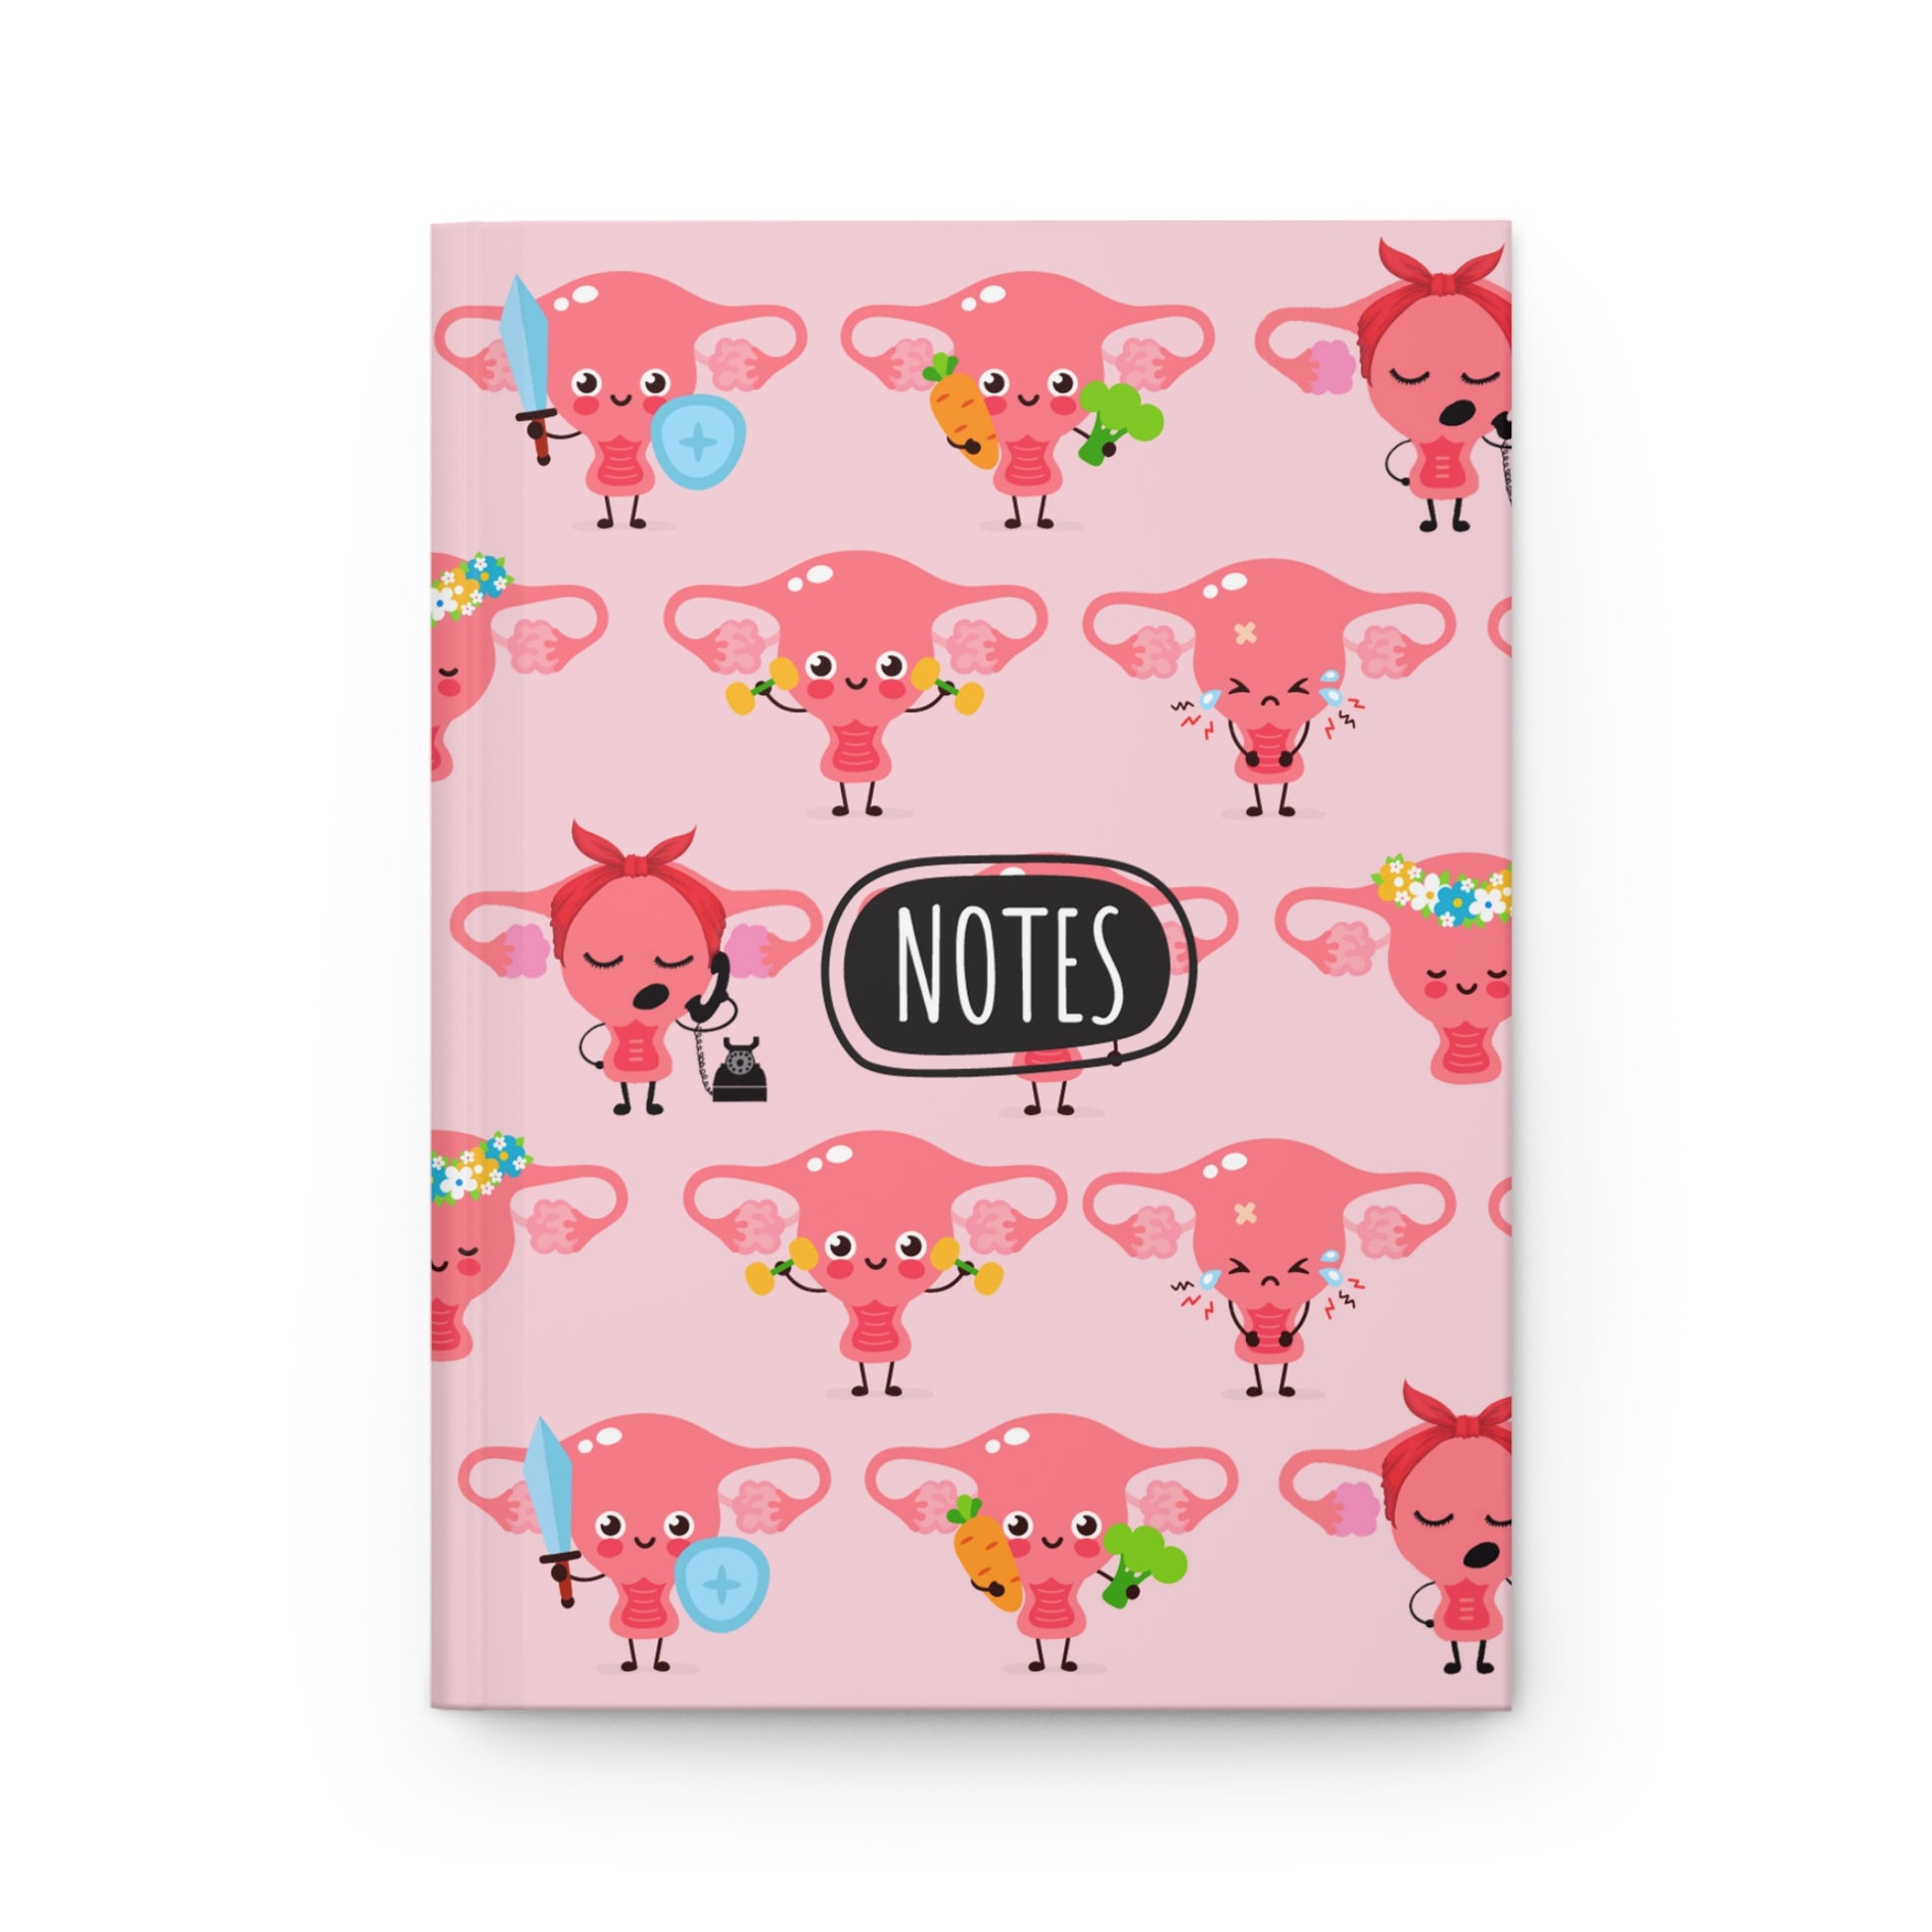 Cutie Cuterus Hardcover Notebook Front